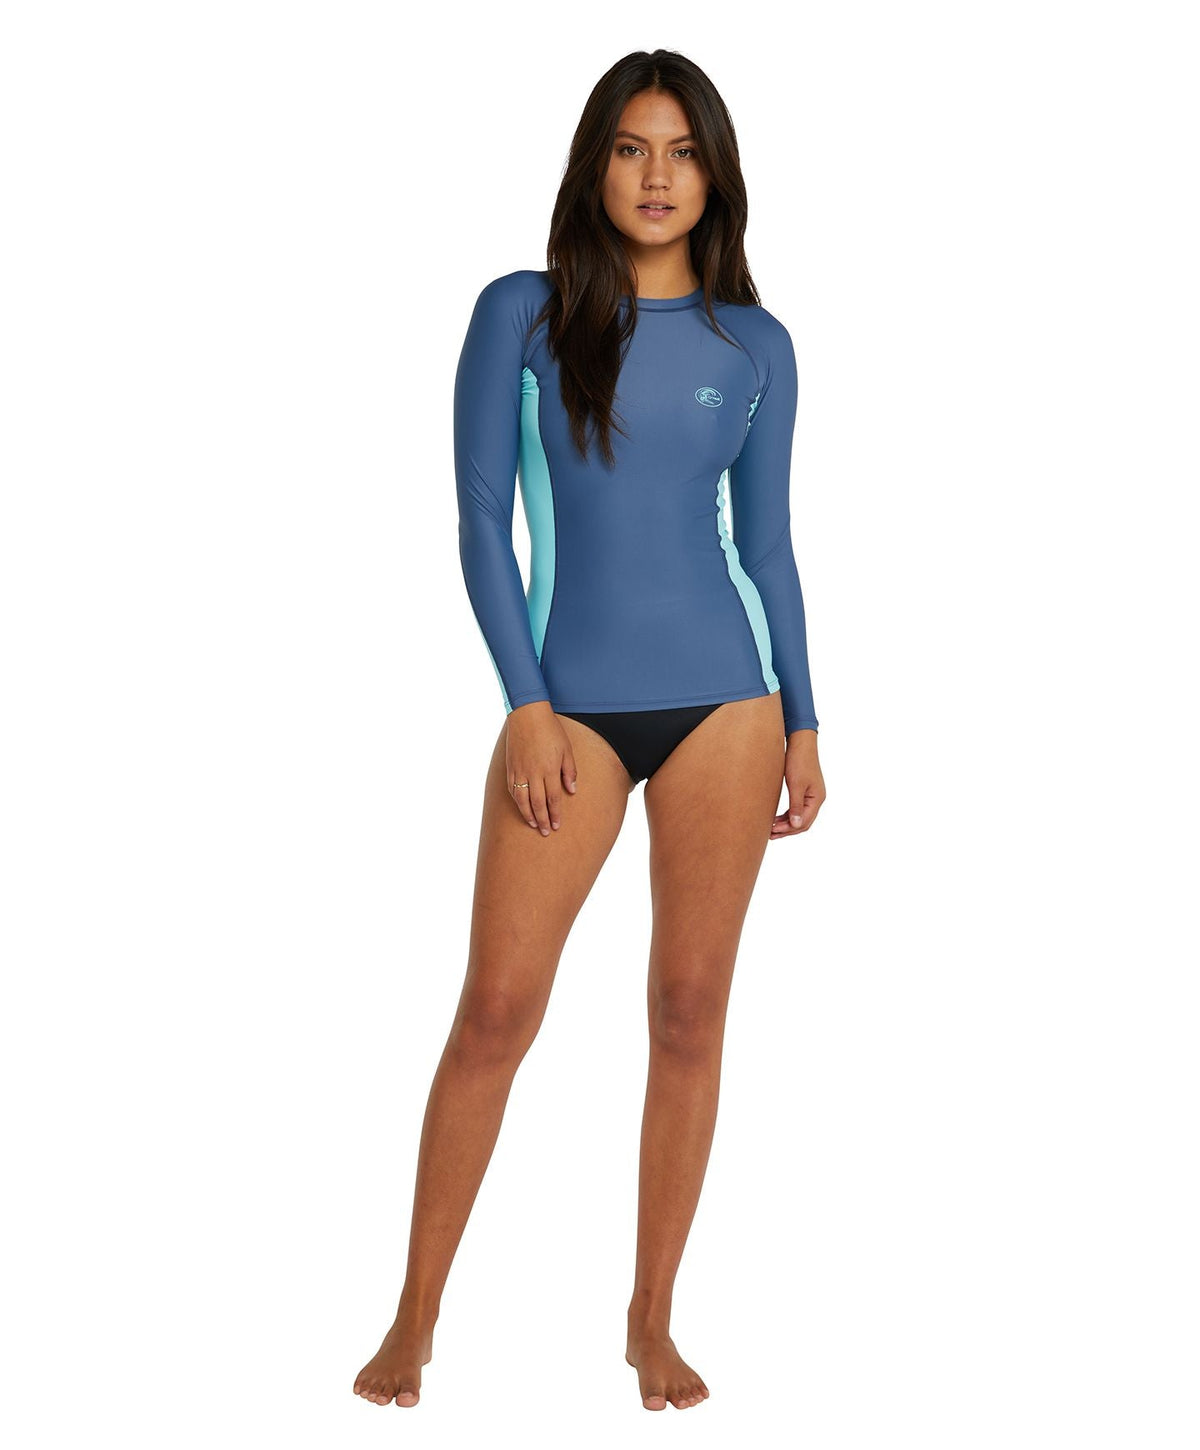 Women's Classic Long Sleeve UV Rash Vest - Navy Aqua